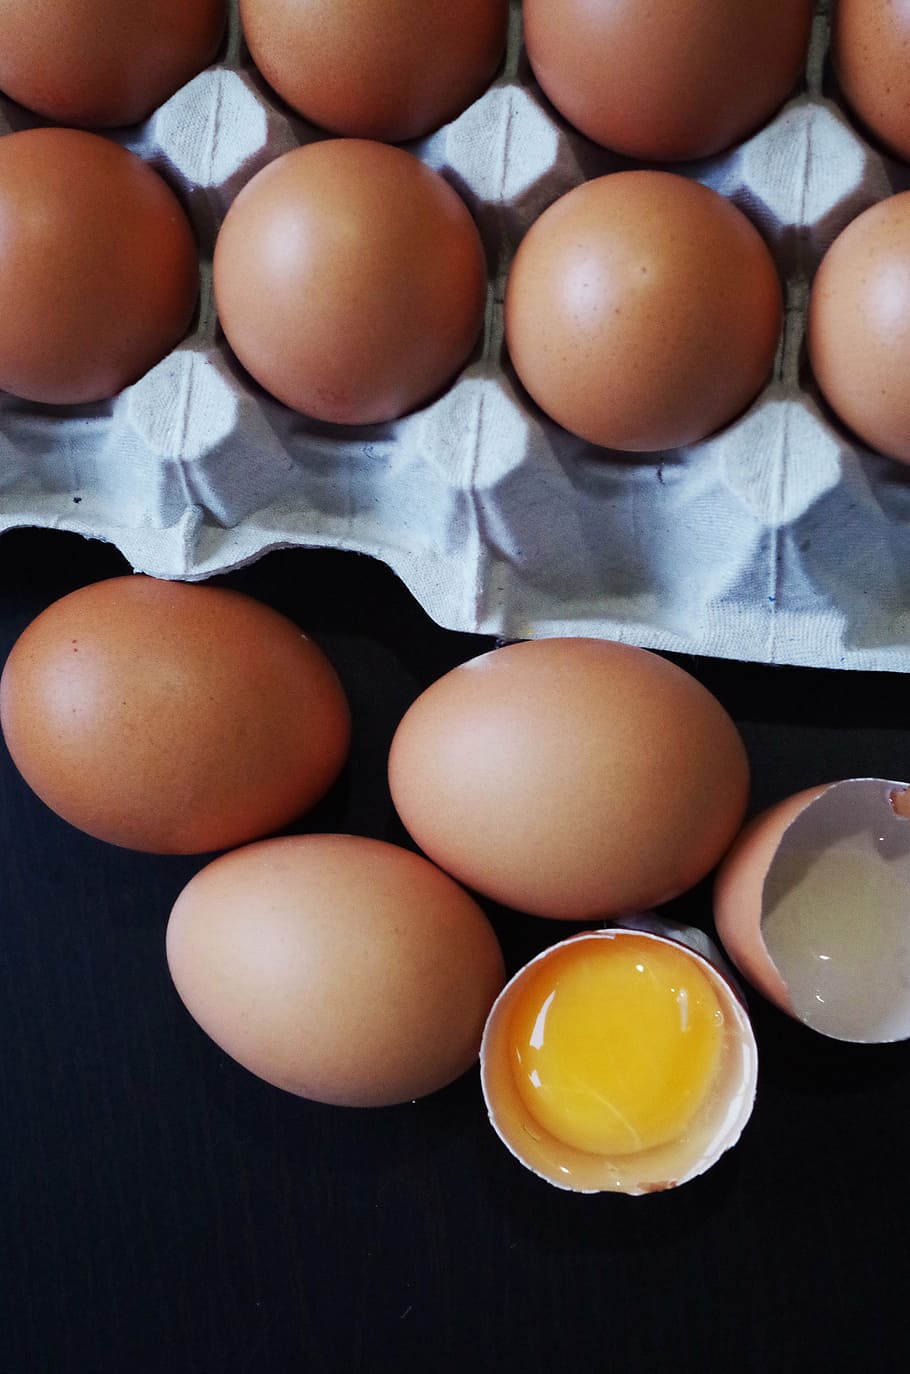 eggs, container, brown, yolk, egg white, broken, food, animal Egg, breakfast, raw Food